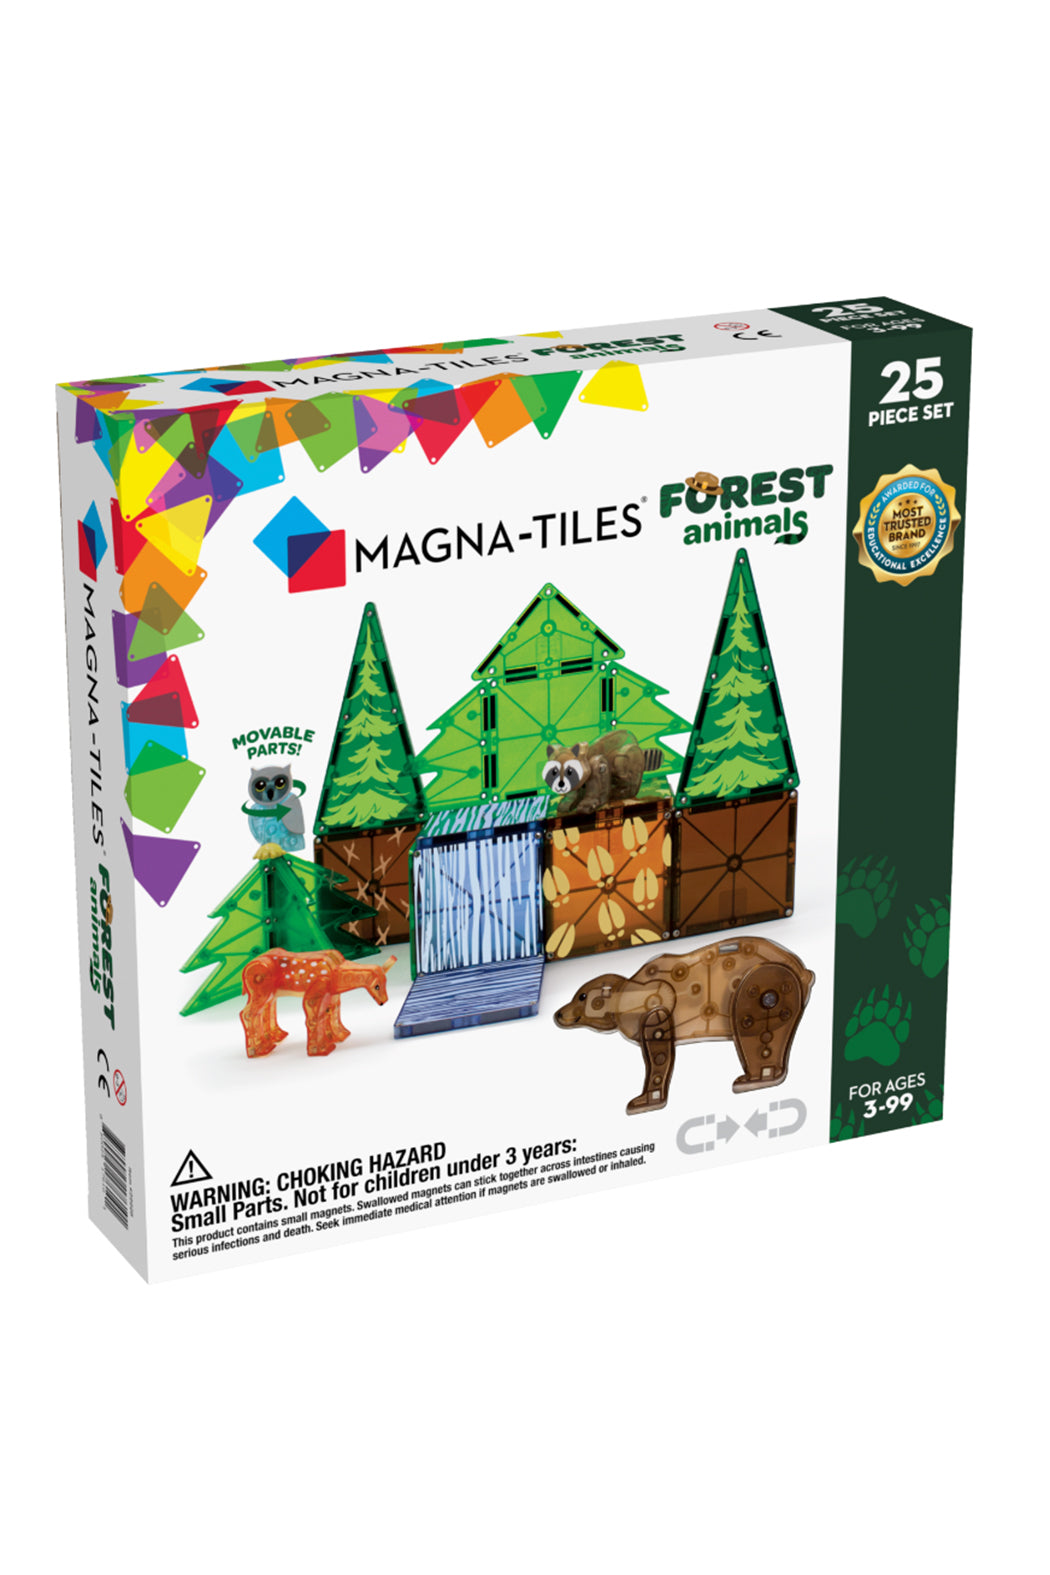 Valtech Magna-Tiles Forest Animals 25 Piece Set